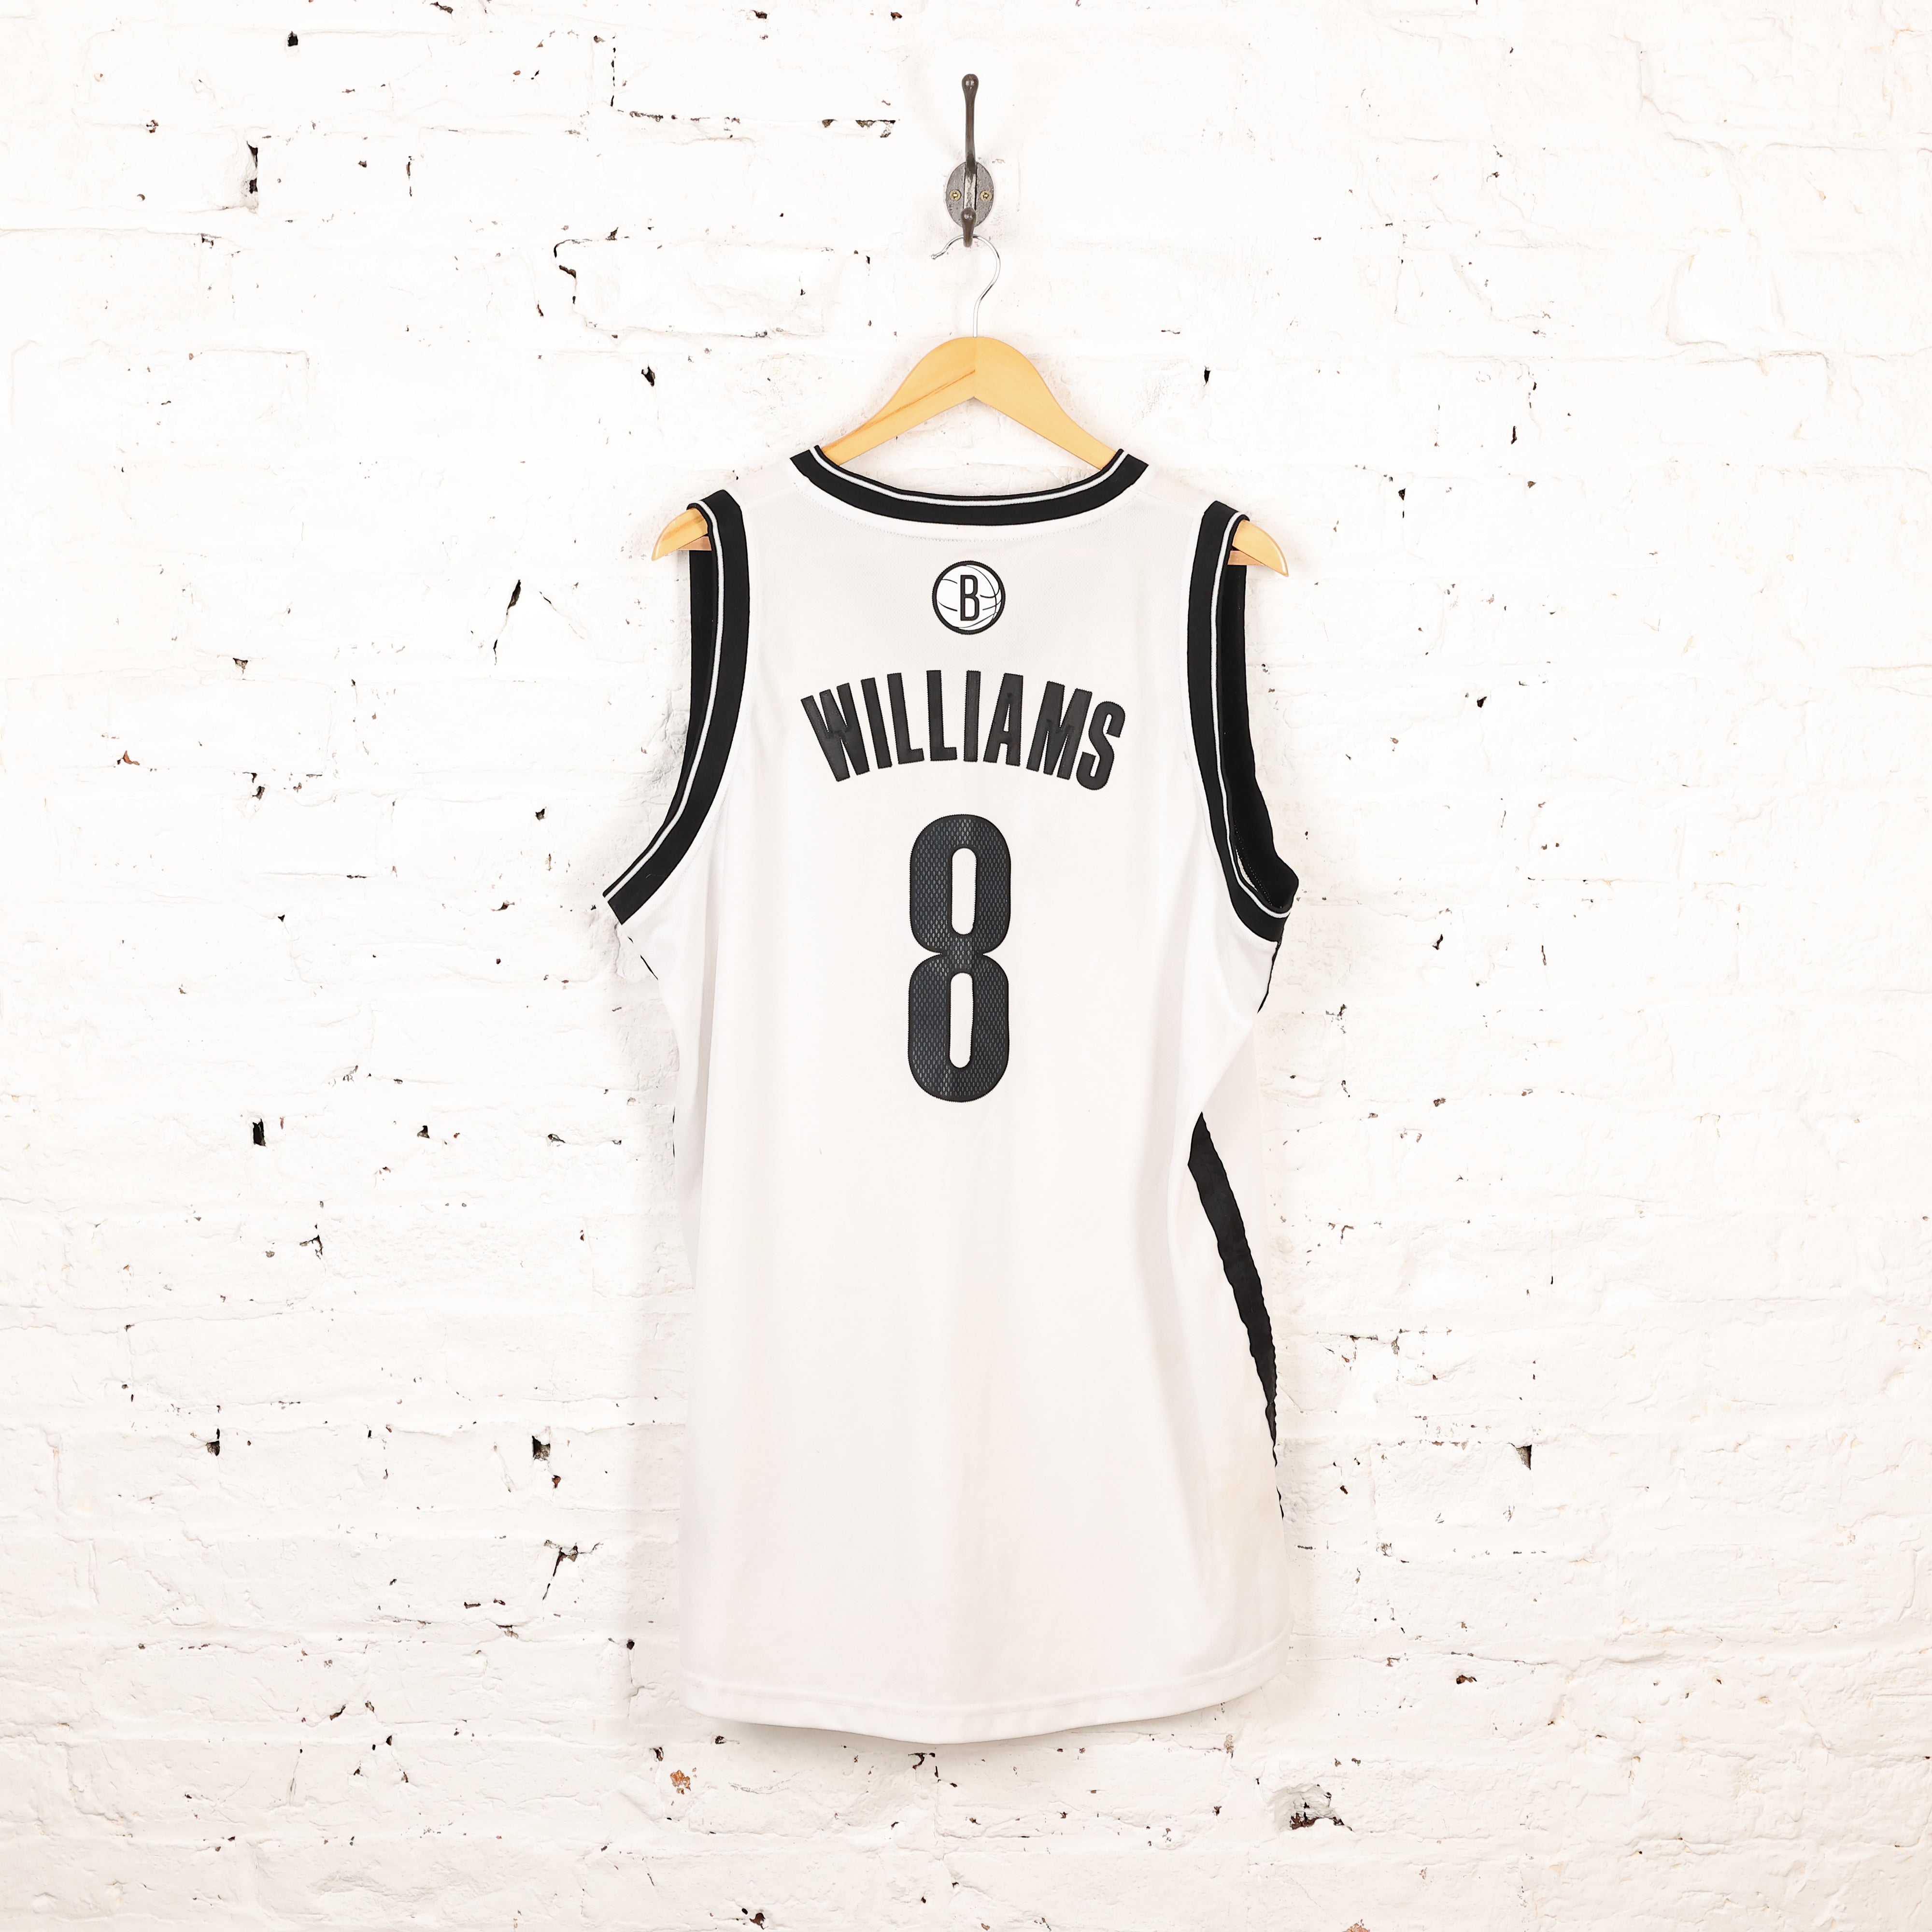 Deron Williams New Jersey Nets Retro Jersey. Adidas. Size L